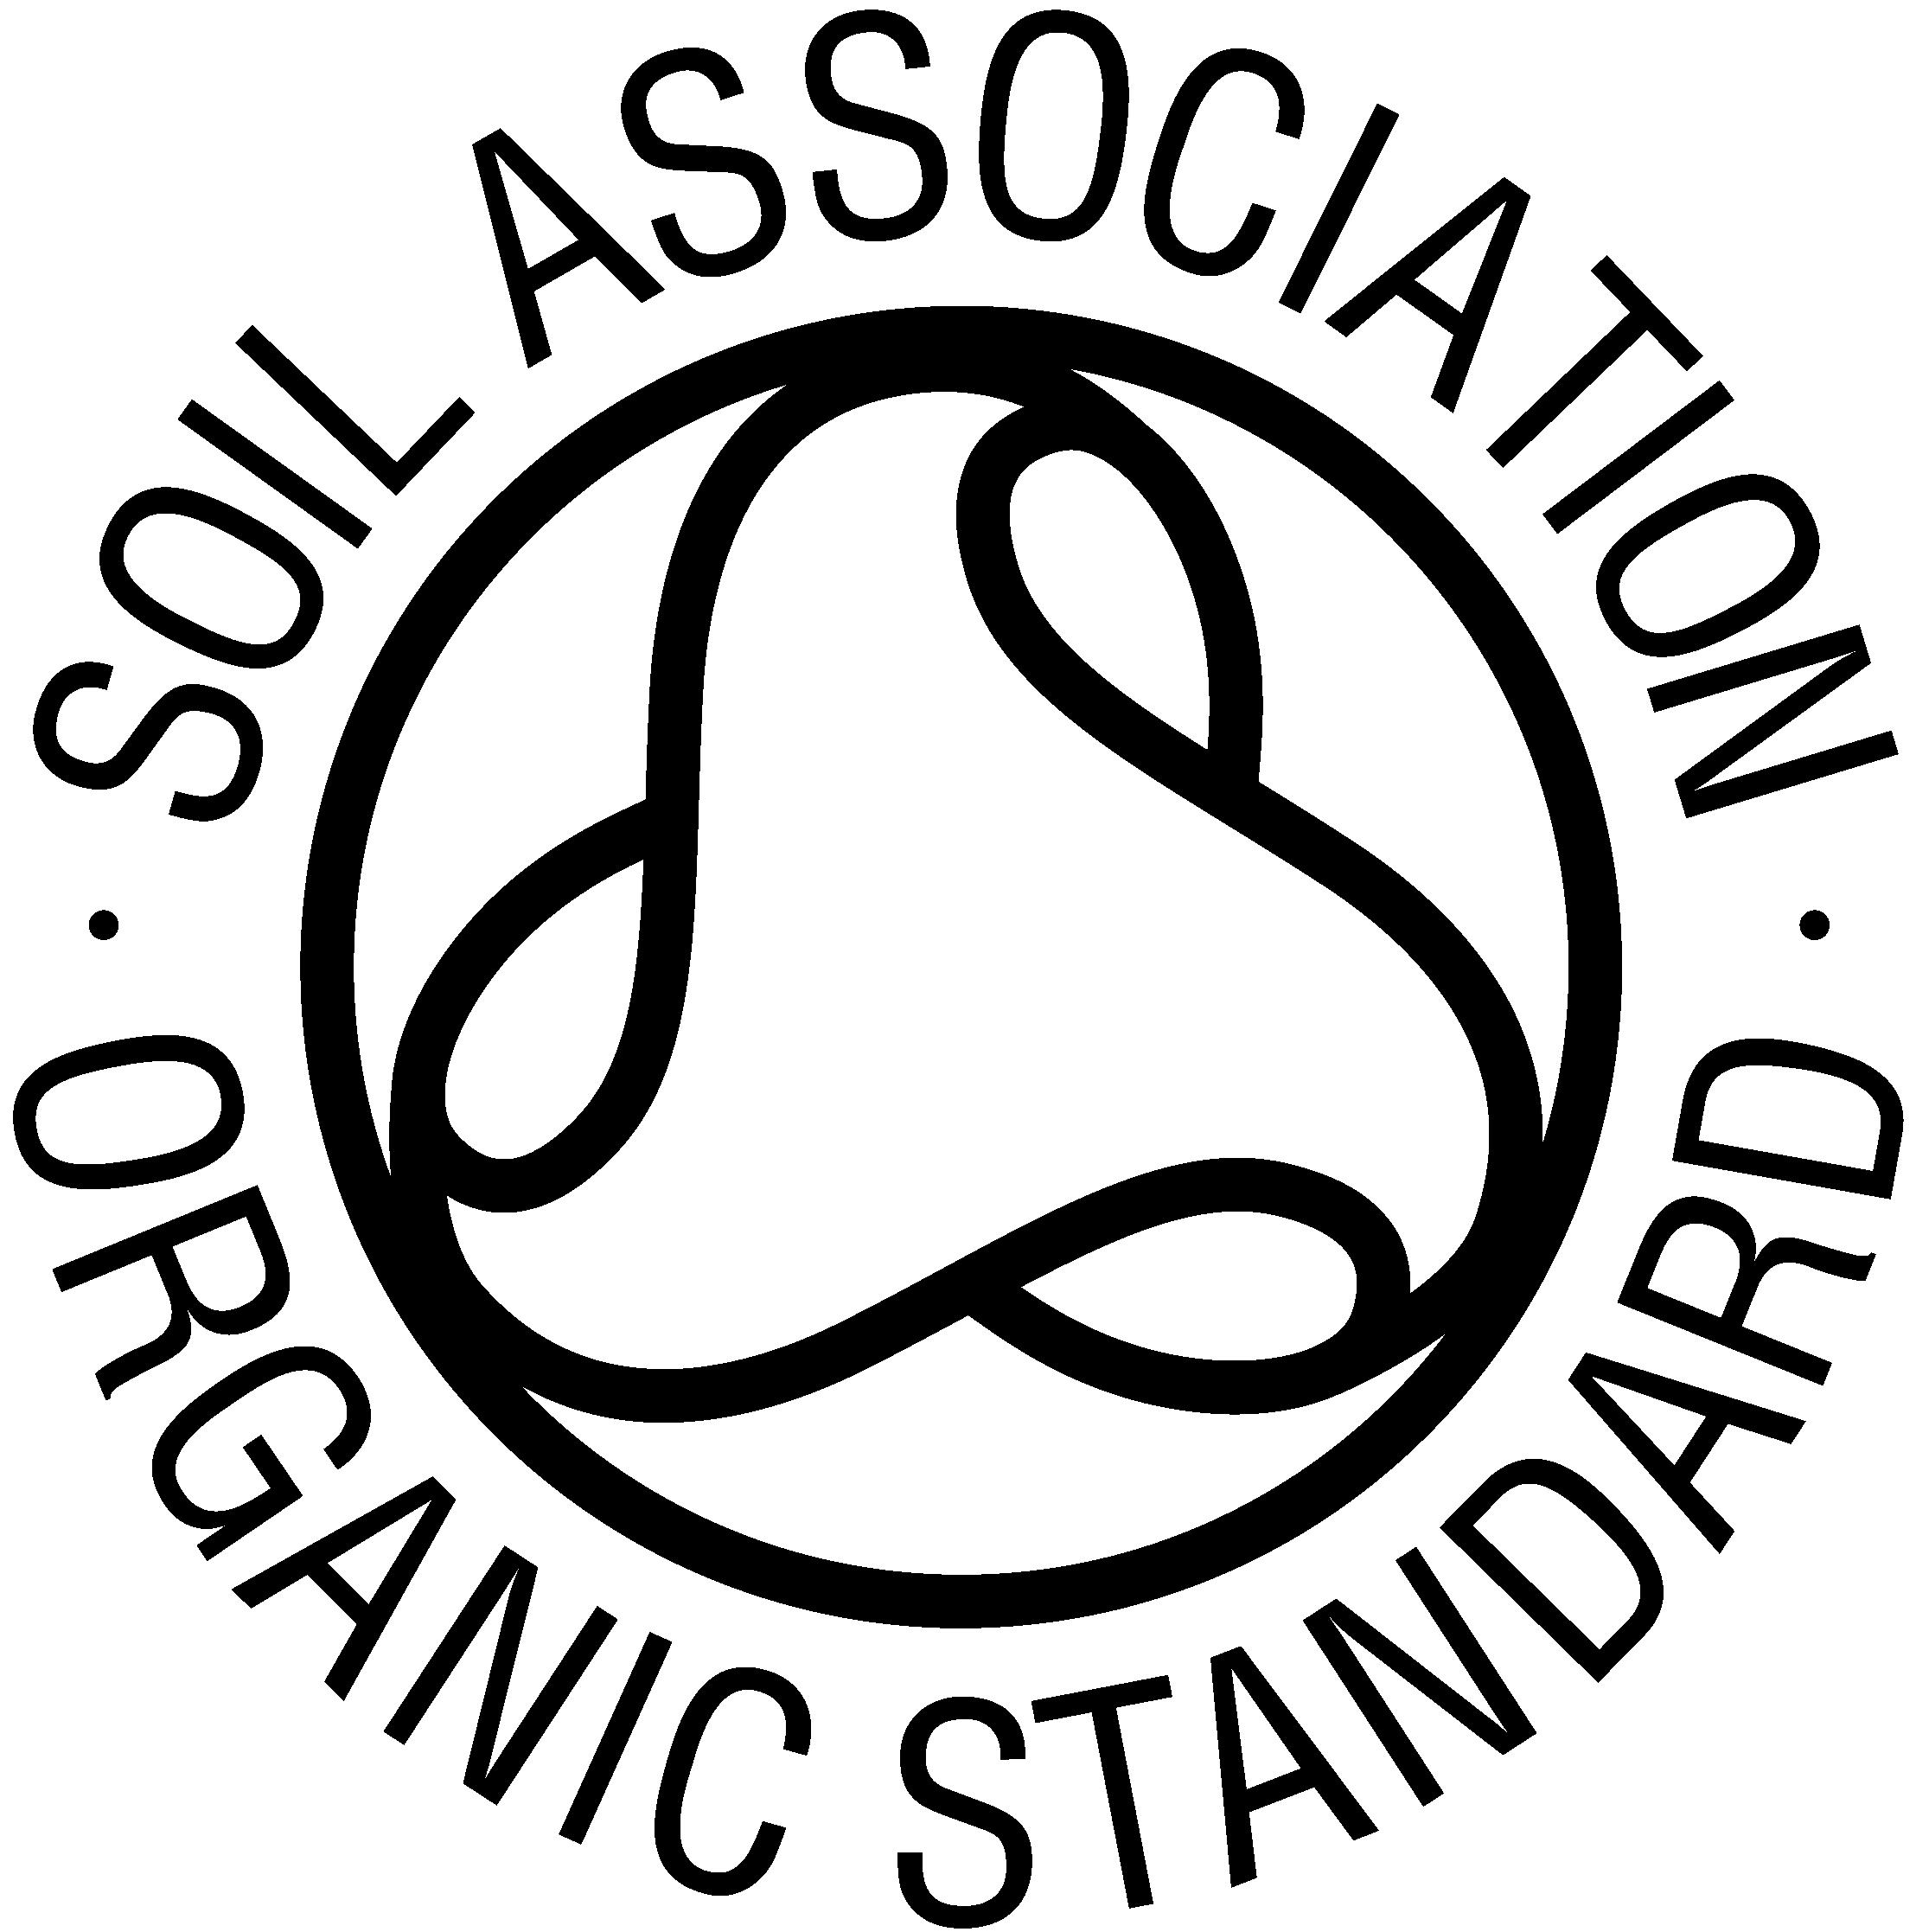 Soil_Association_logo-jpeg.jpg